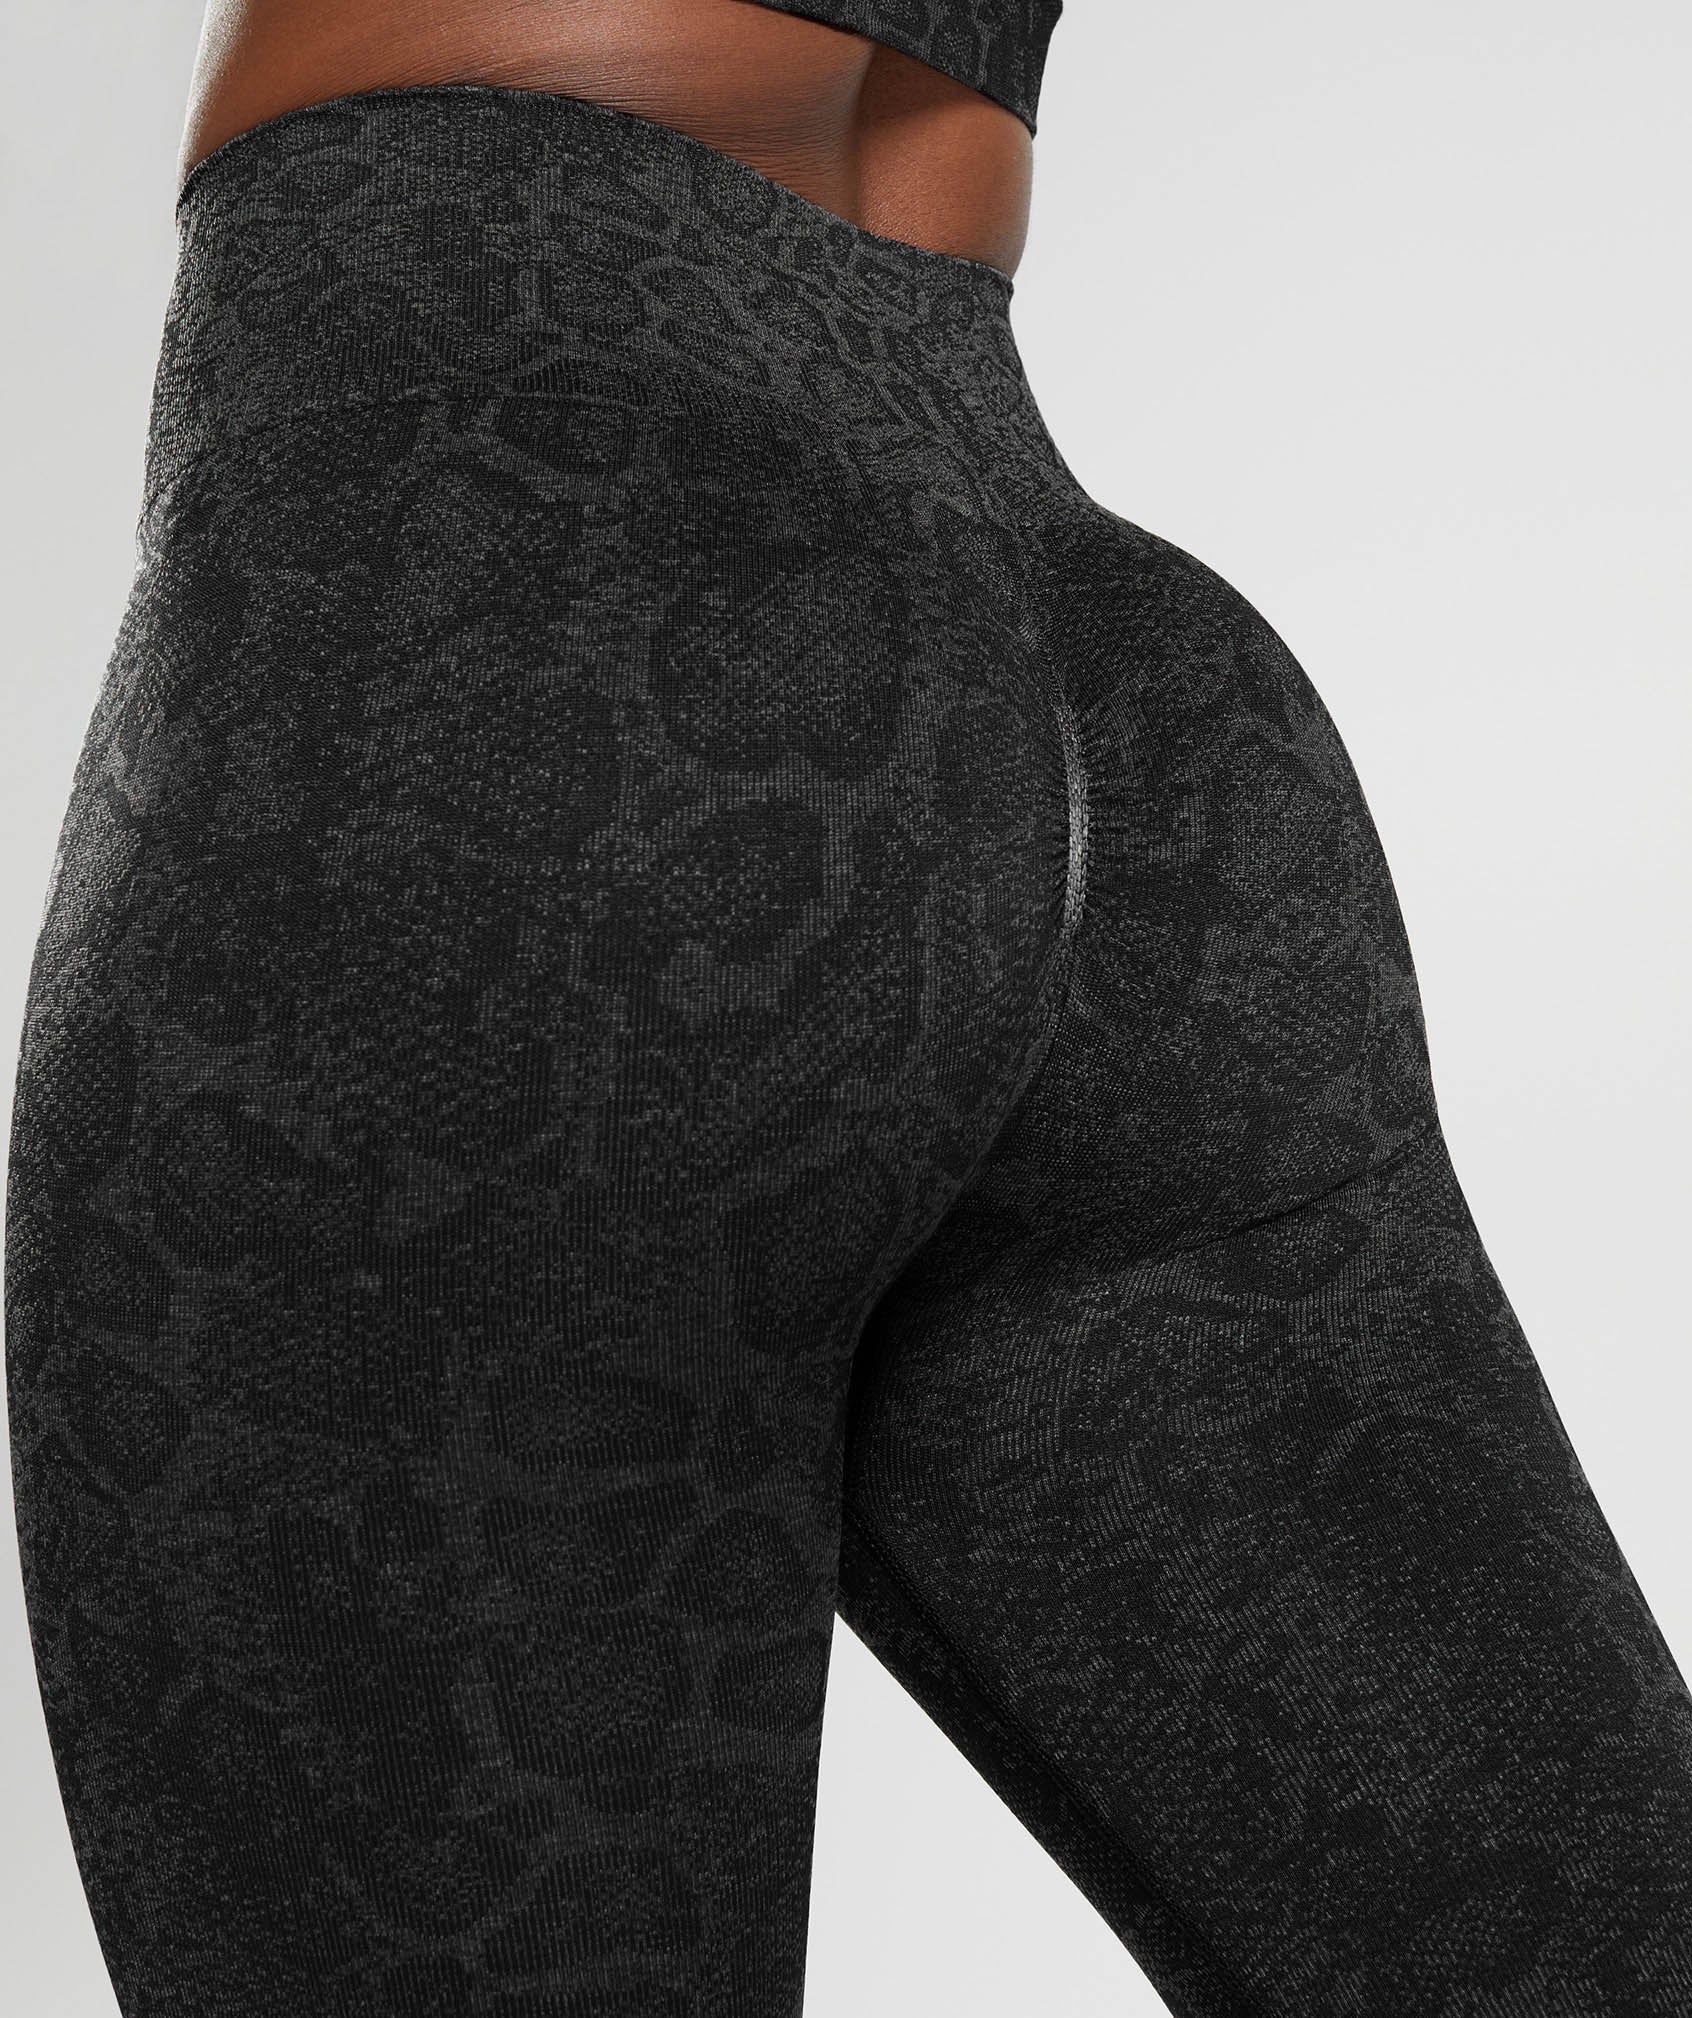 Grey Leopard Yoga Leggings Women, Animal Print High Waisted Pants Cute –  Starcove Fashion